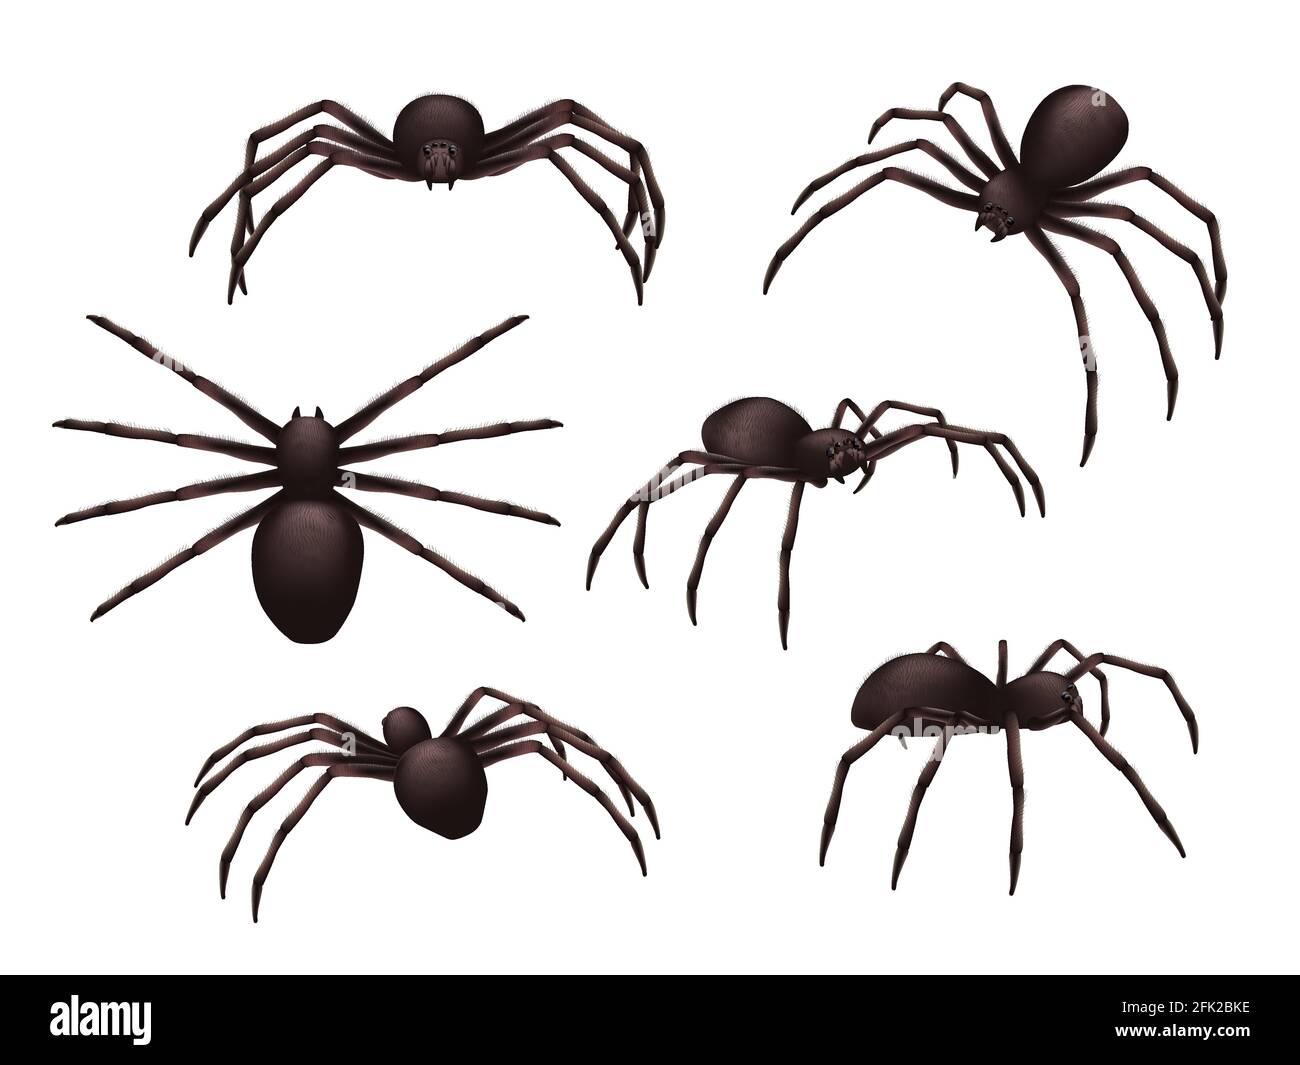 Insects realistic. Spider danger venom horror poisonous black symbols vector set Stock Vector